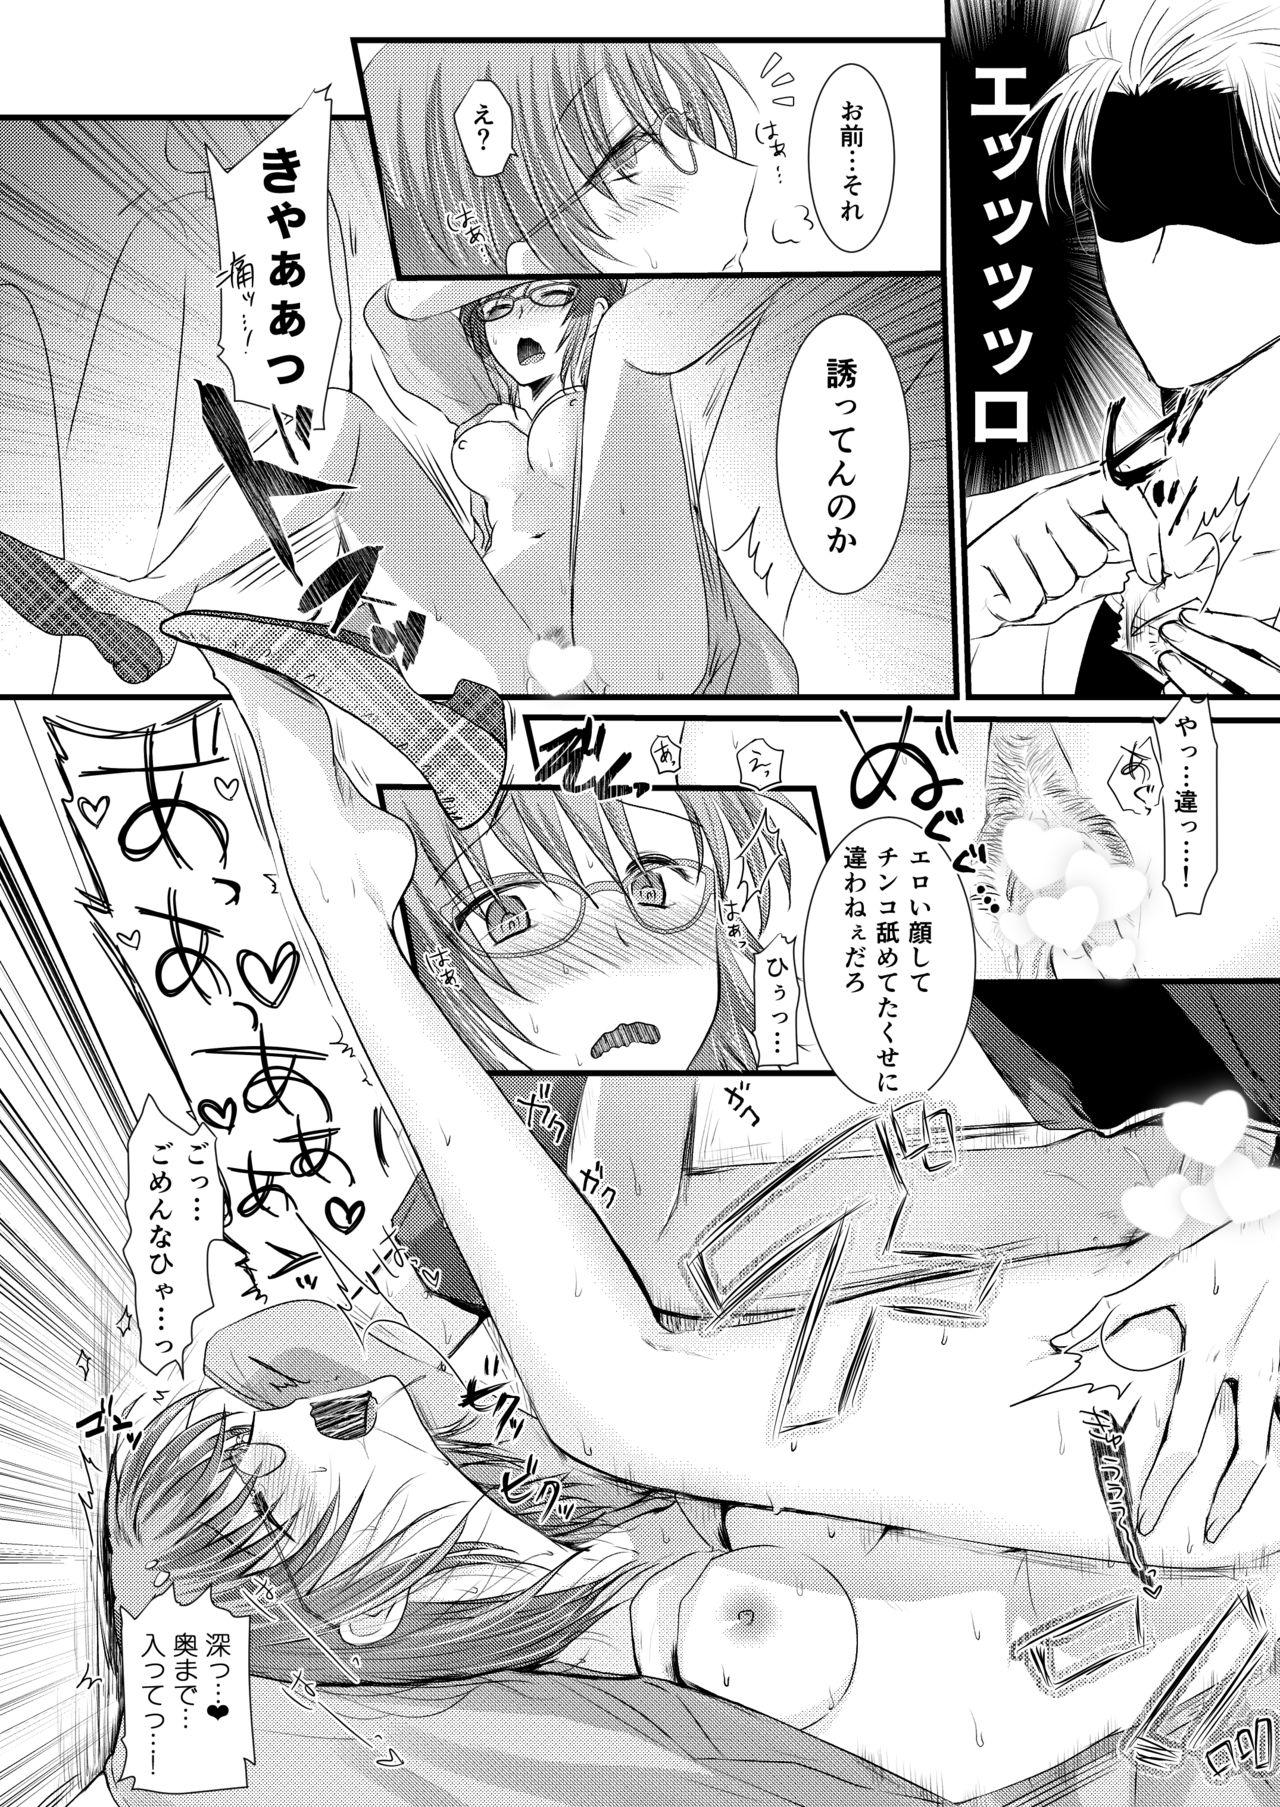 Seijin Muke Manga 16p 13